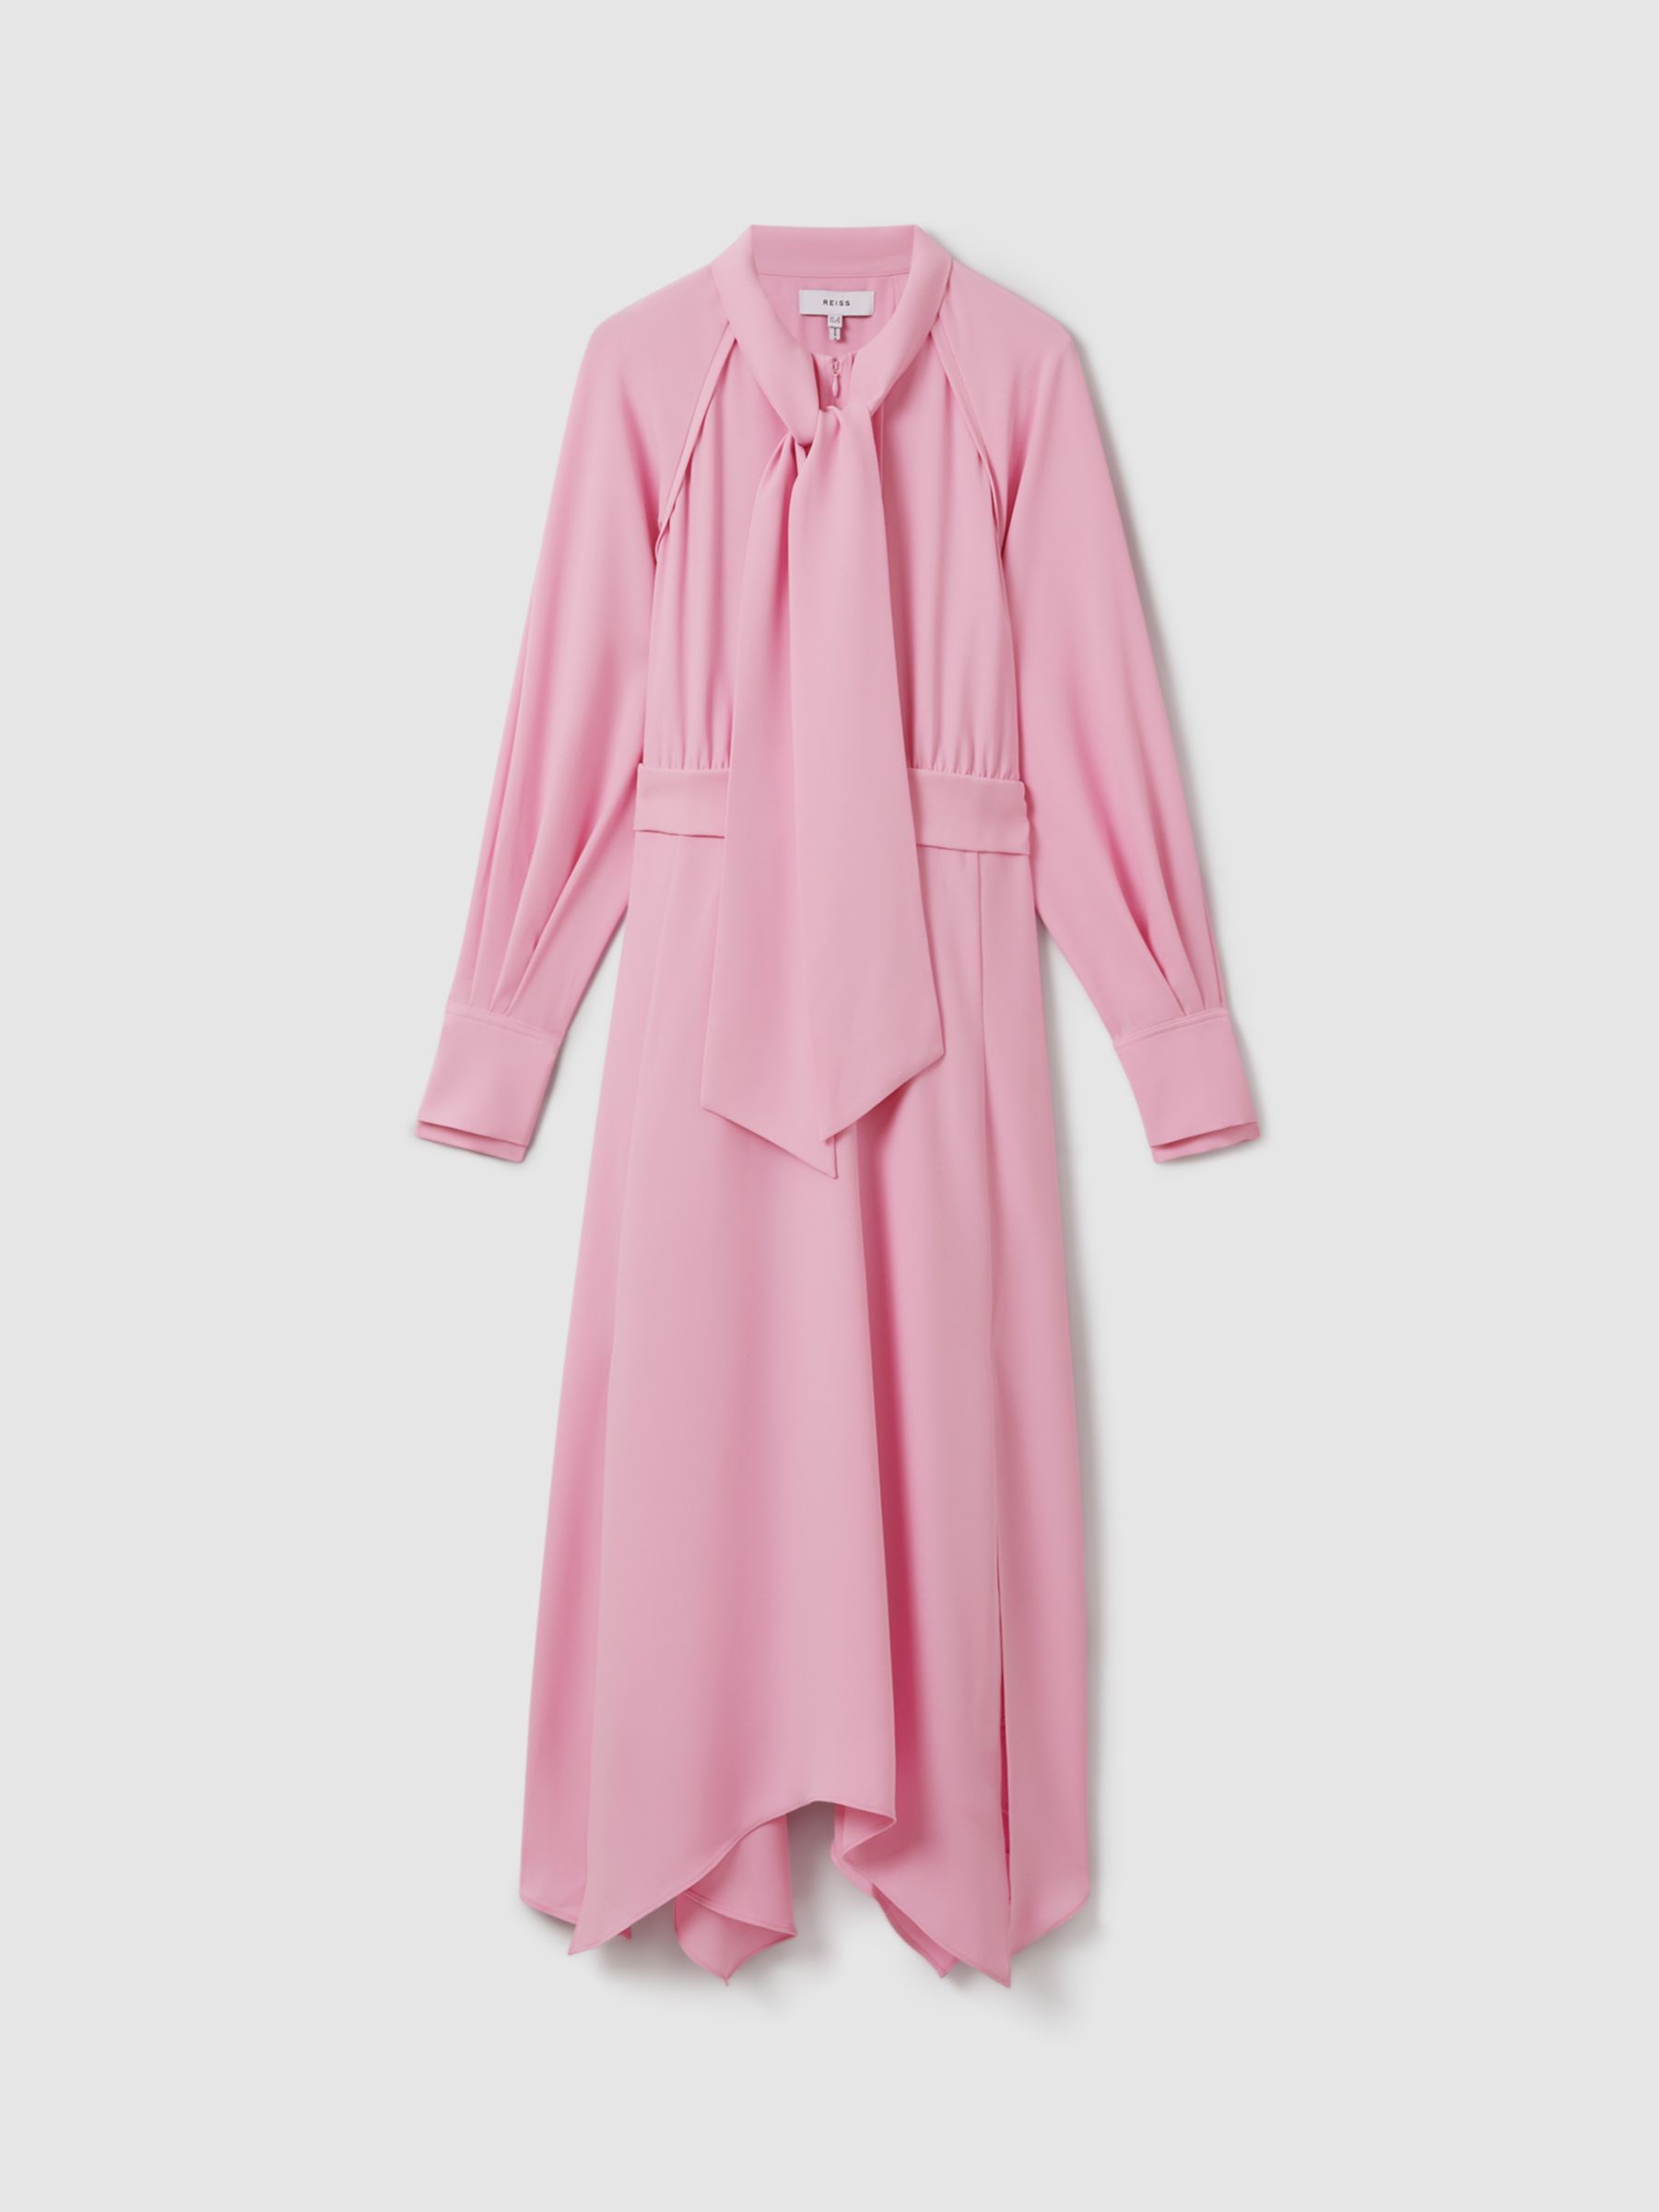 Reiss Erica Tie Neck Belted Midi Dress, Pink, 6